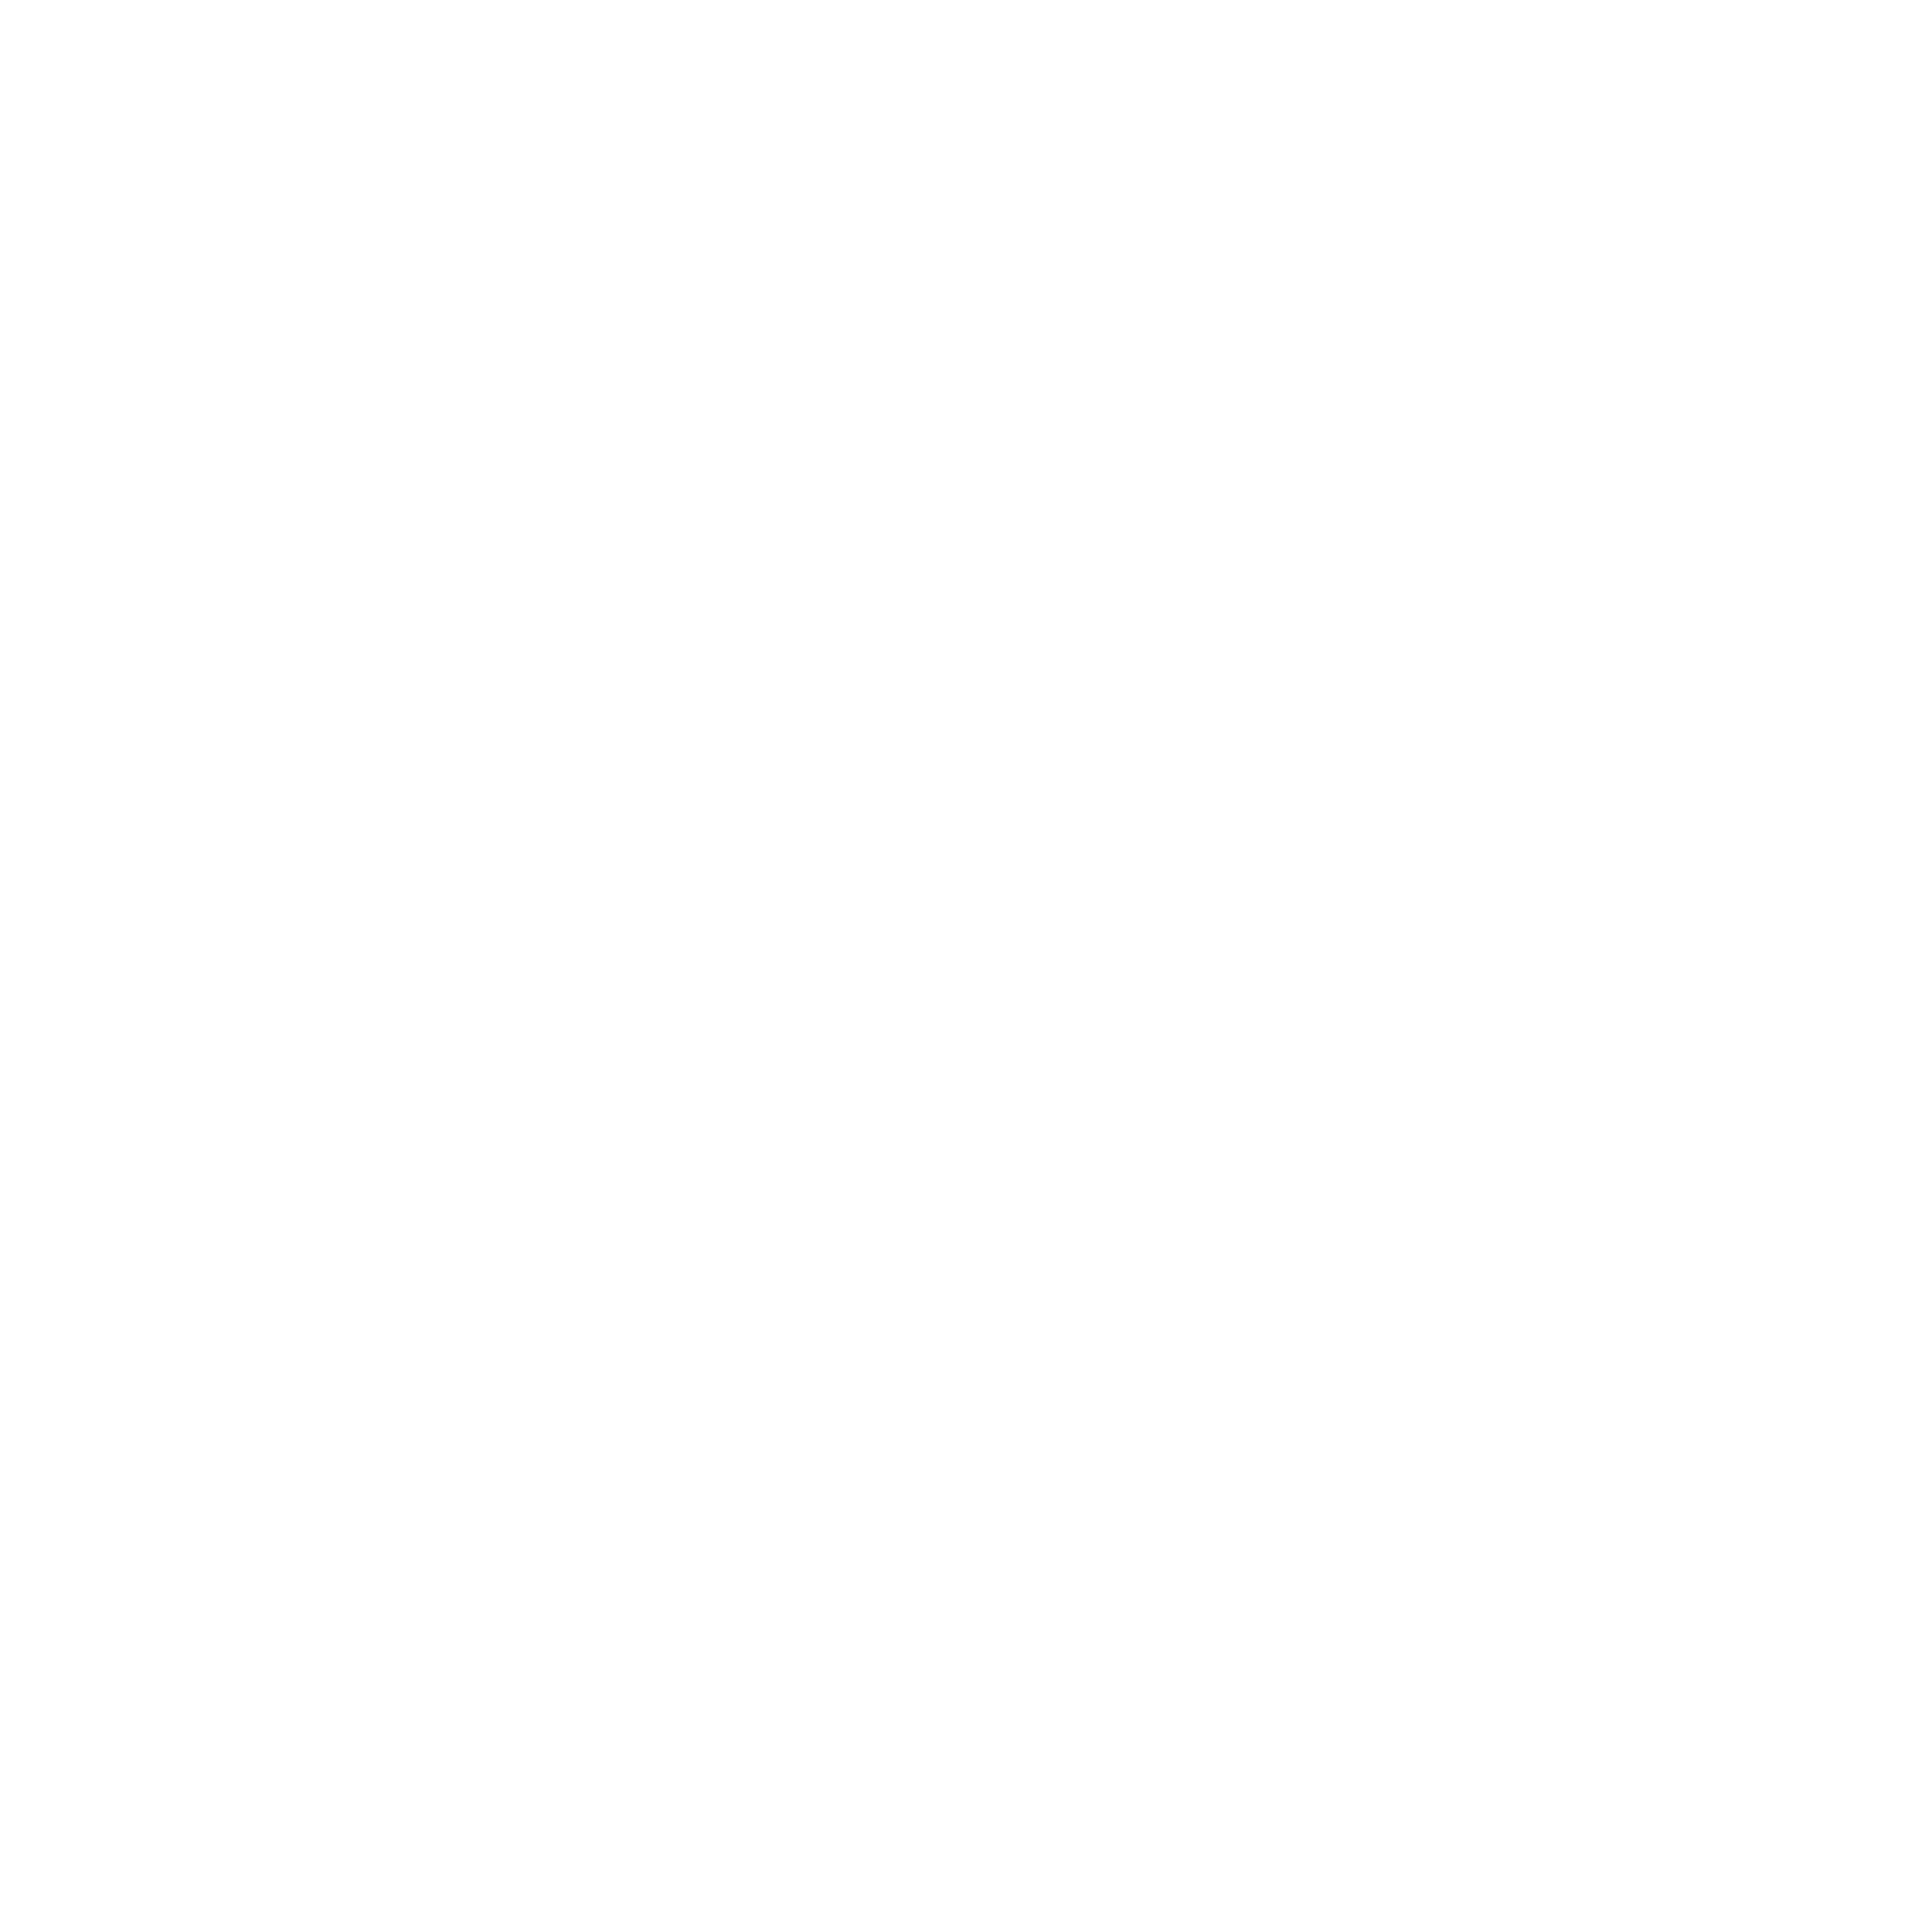 Sip Stir Coffee House